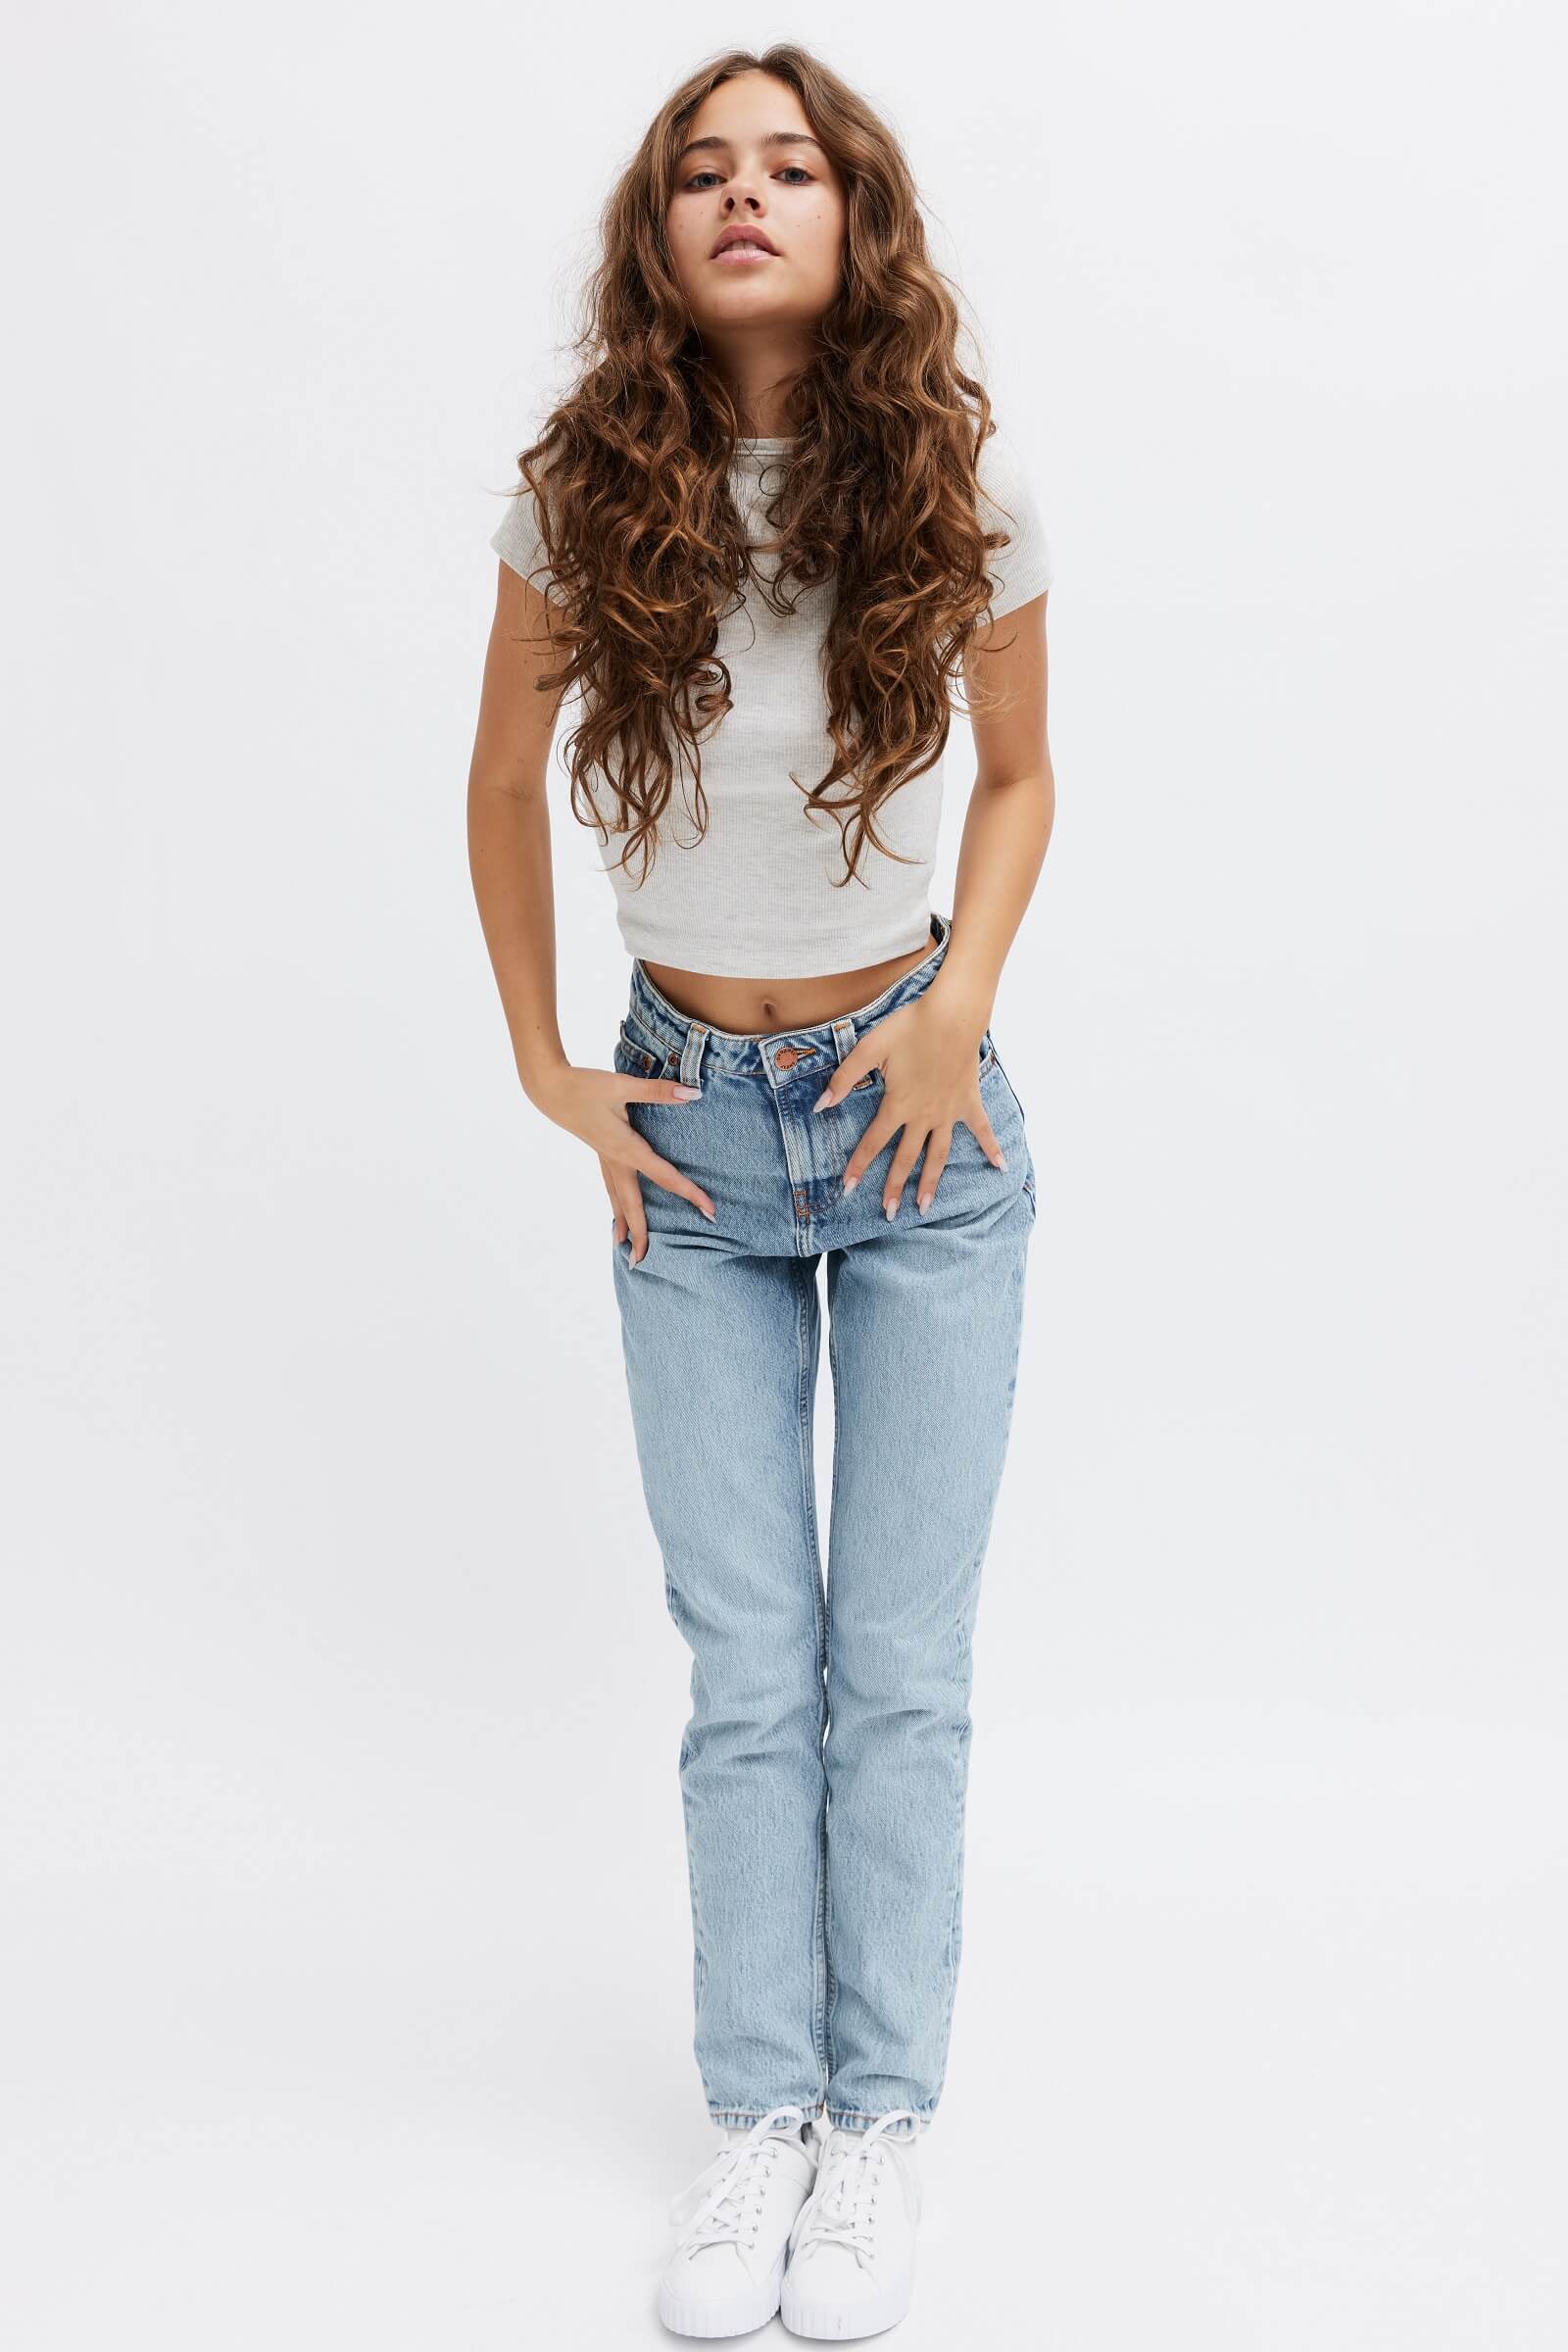 Women's organic cotton jeans - Chic and stylish